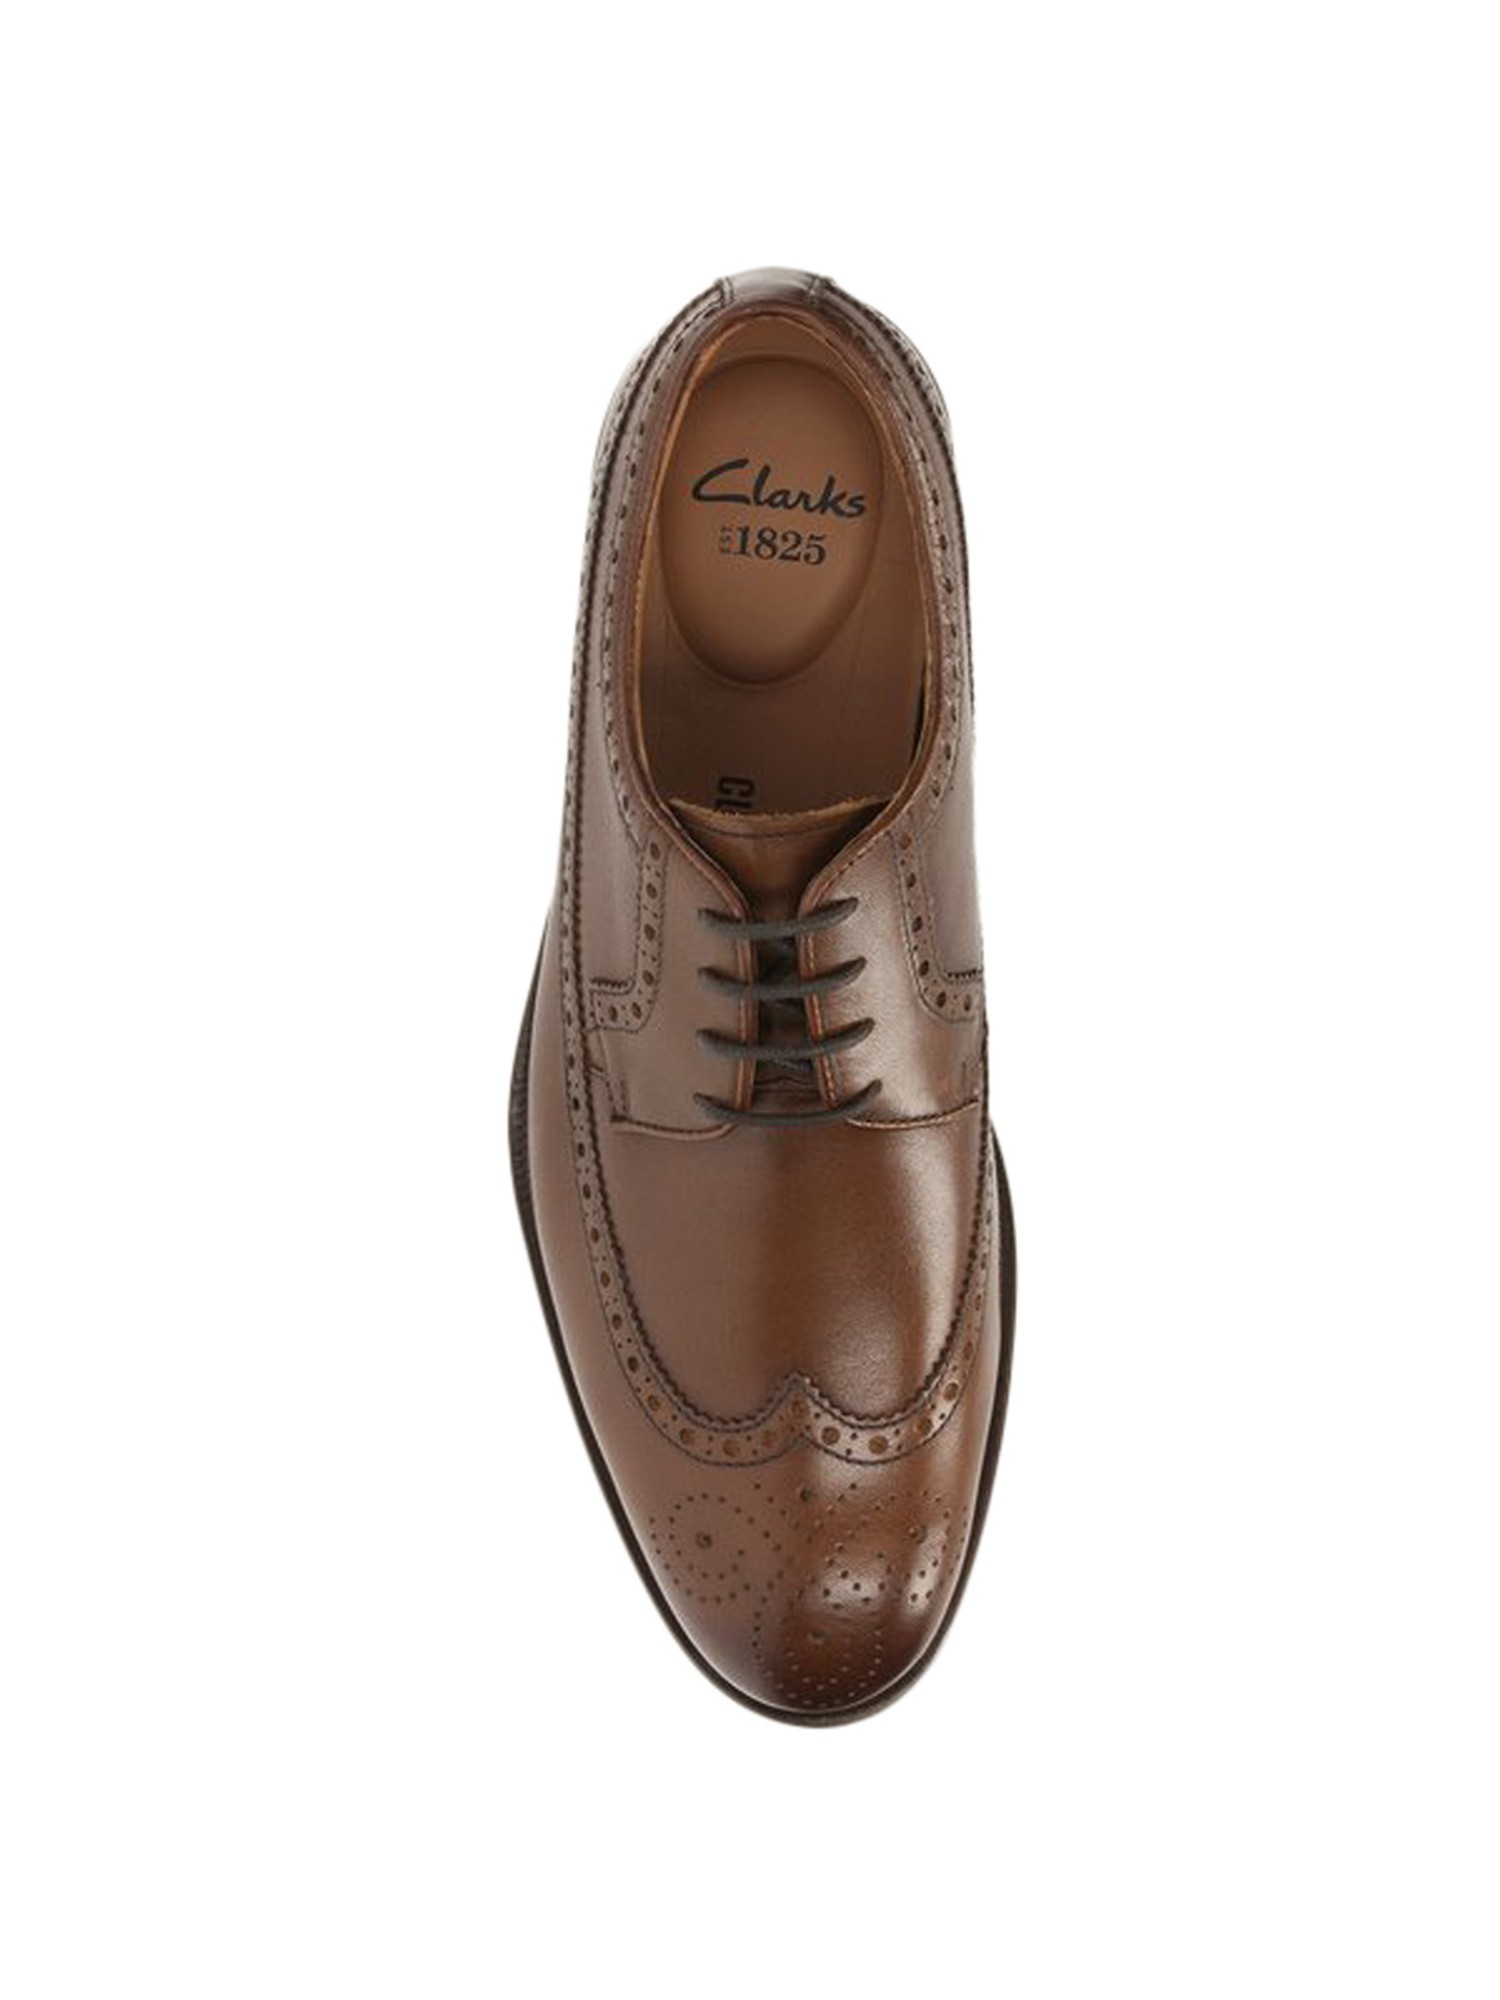 Propio Solitario Curiosidad Buy Clarks Coling Limit Brown Brogue Shoes for Men at Best Price @ Tata CLiQ